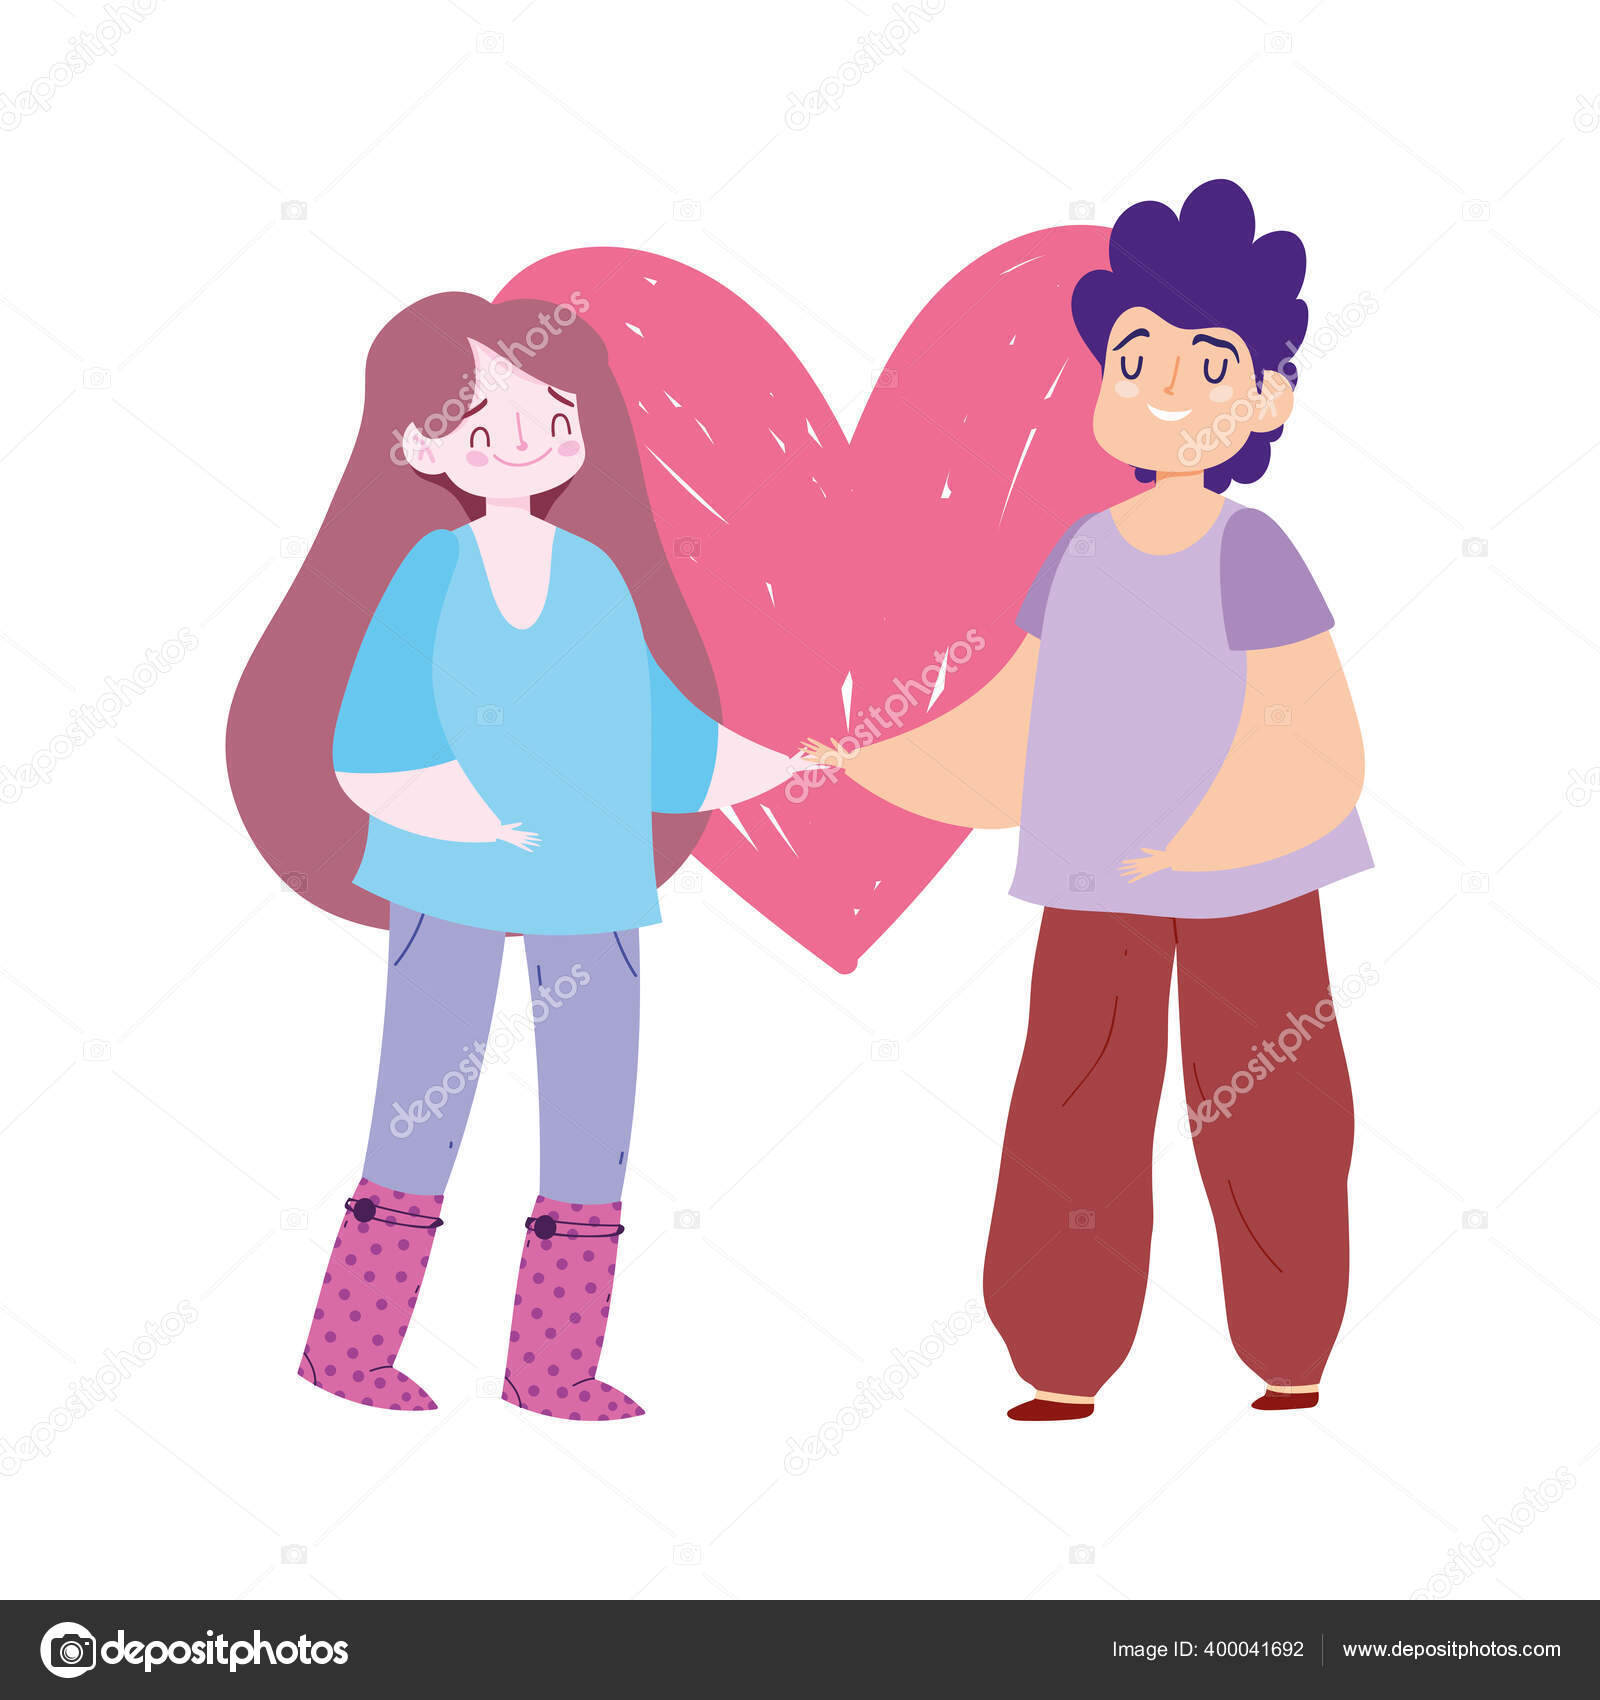 Romantic Couple With Heart Romantic Cartoon Design Vector Image By C Stockgiu Vector Stock 400041692